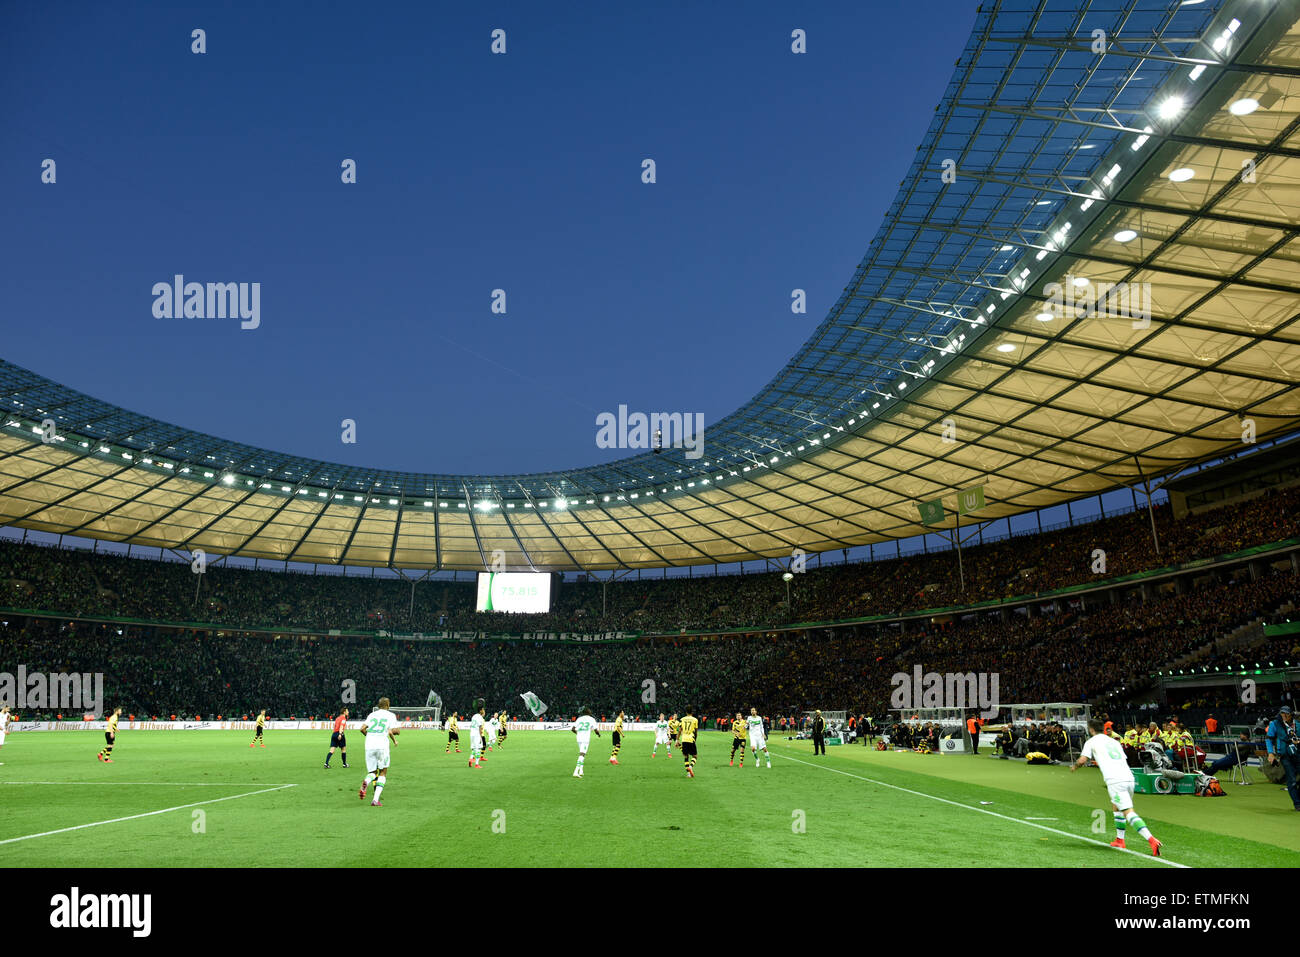 DFB Pokalfinale 2015, Olympiastadion am Abend, Berlin, Deutschland Stockfoto